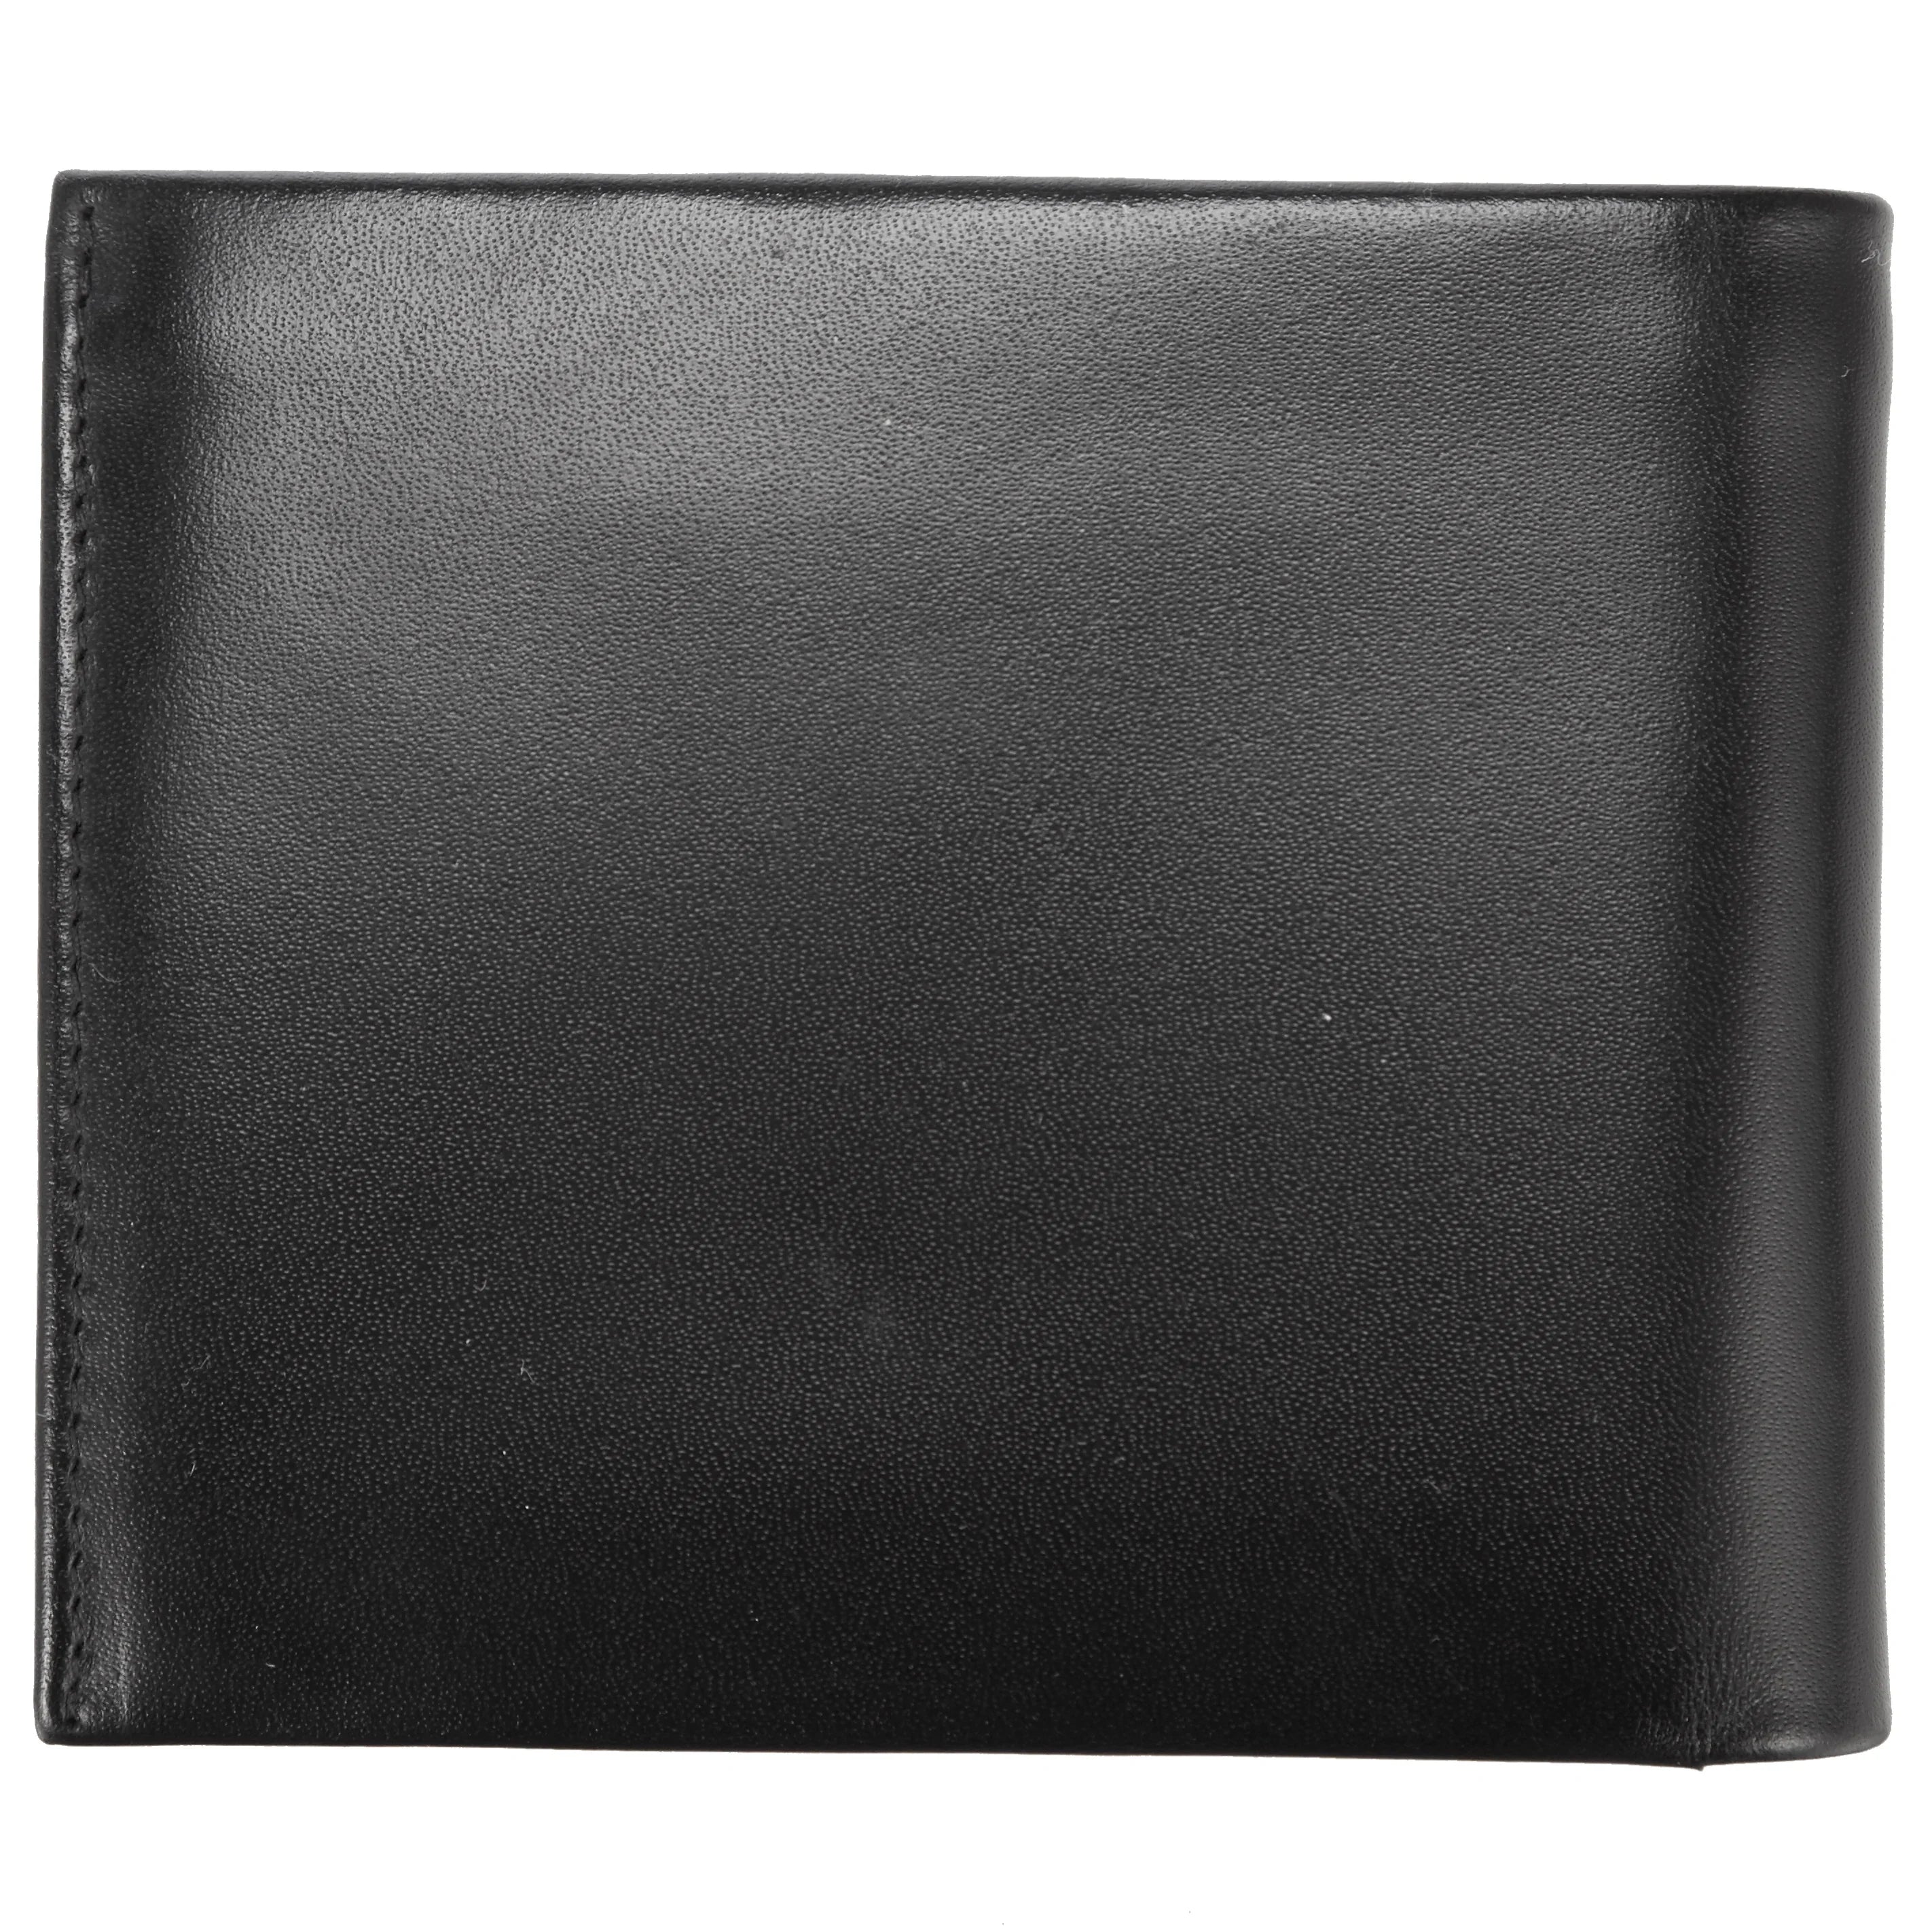 Porsche Design Accessories Classic Wallet 4 RFID 11 cm - Black